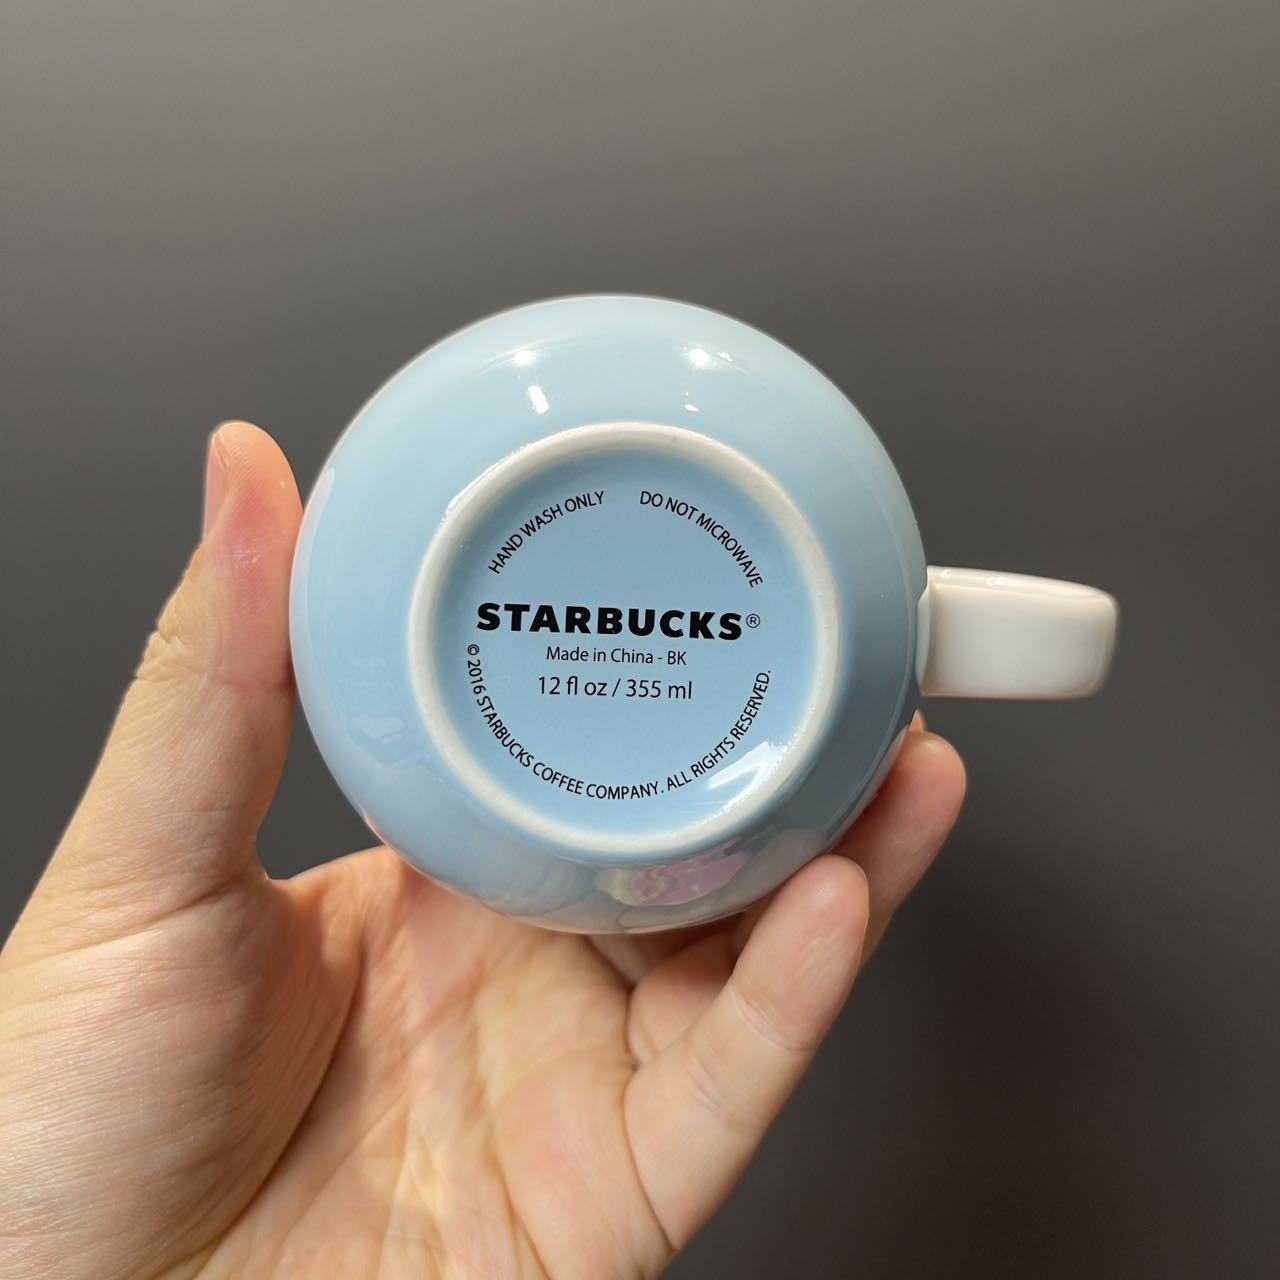 Starbucks China Valentine's Day Bearista keychain and cup